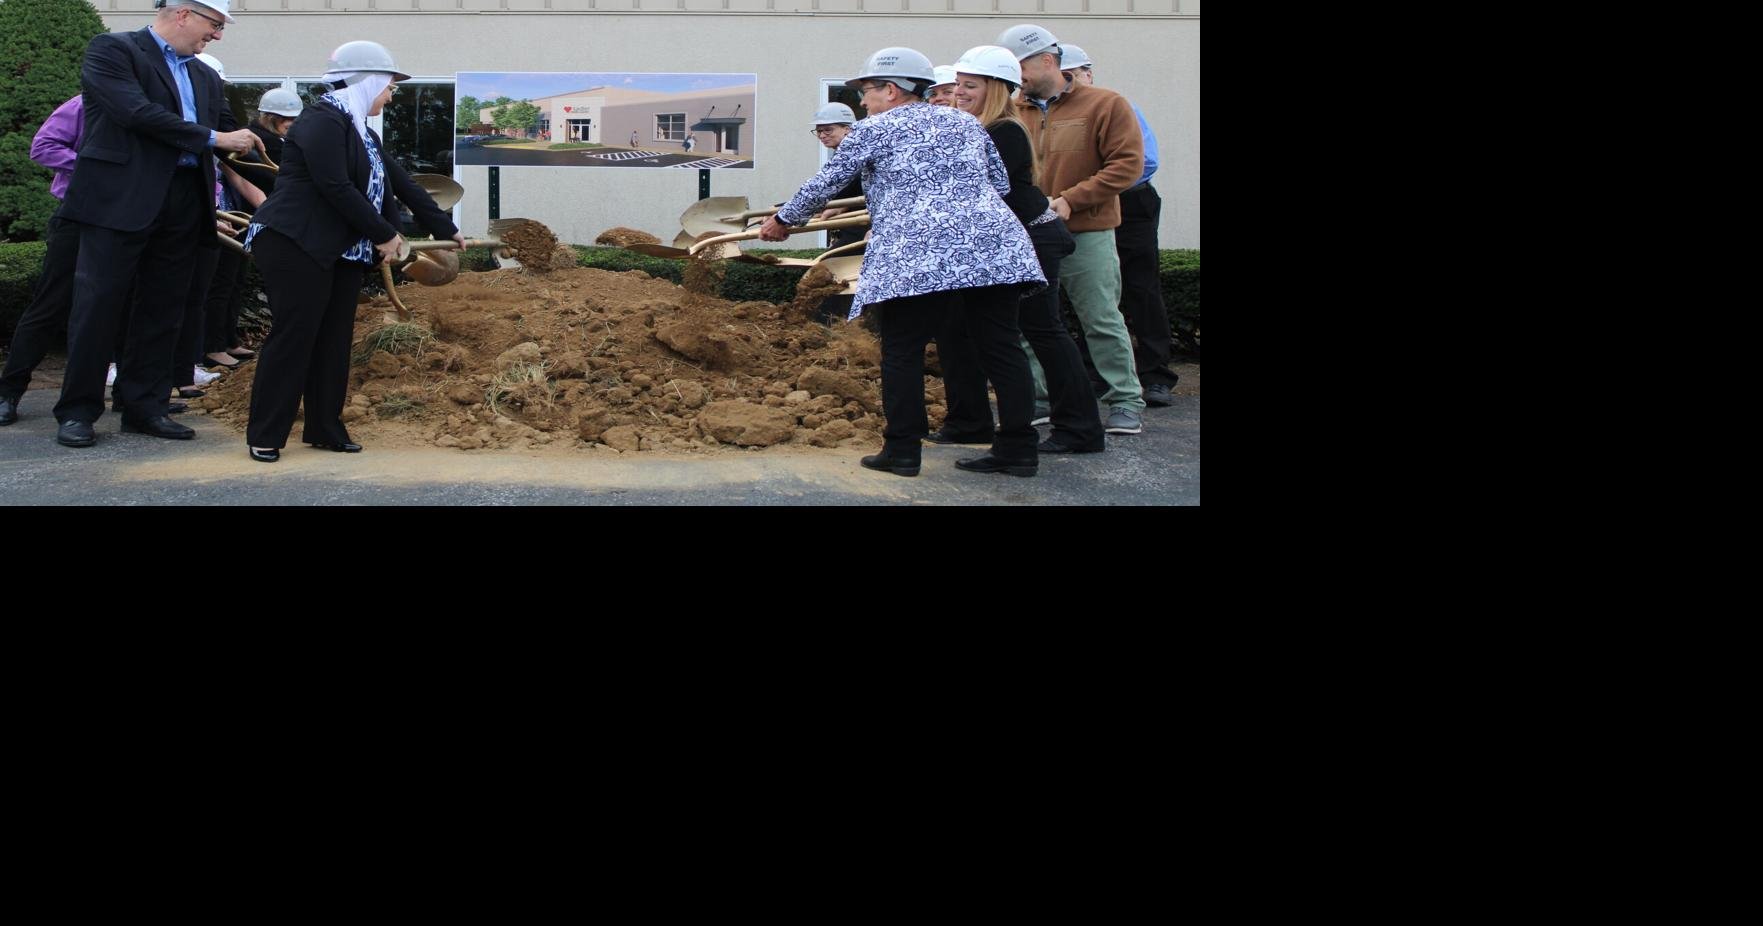 Sadler Health Center breaks ground at new Mechanicsburg facility